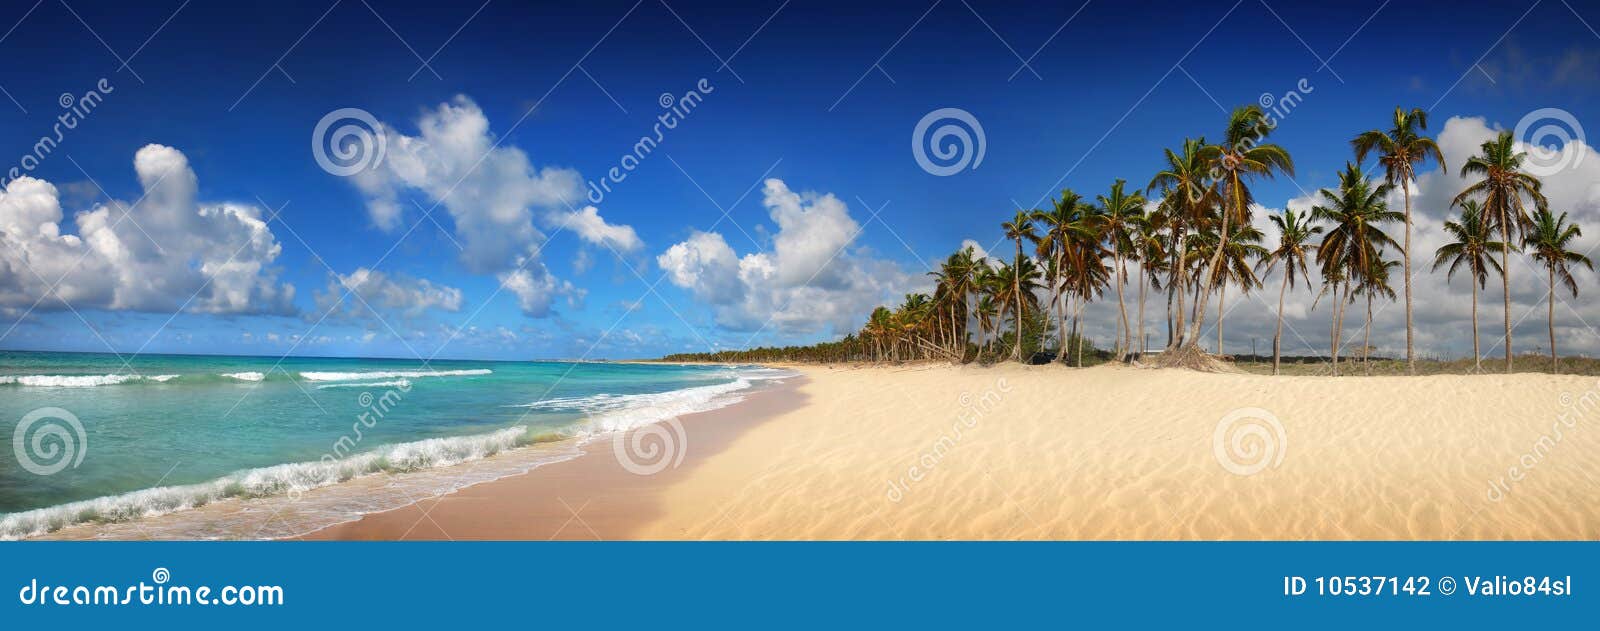 tropical beach in dominican republic, panoramic